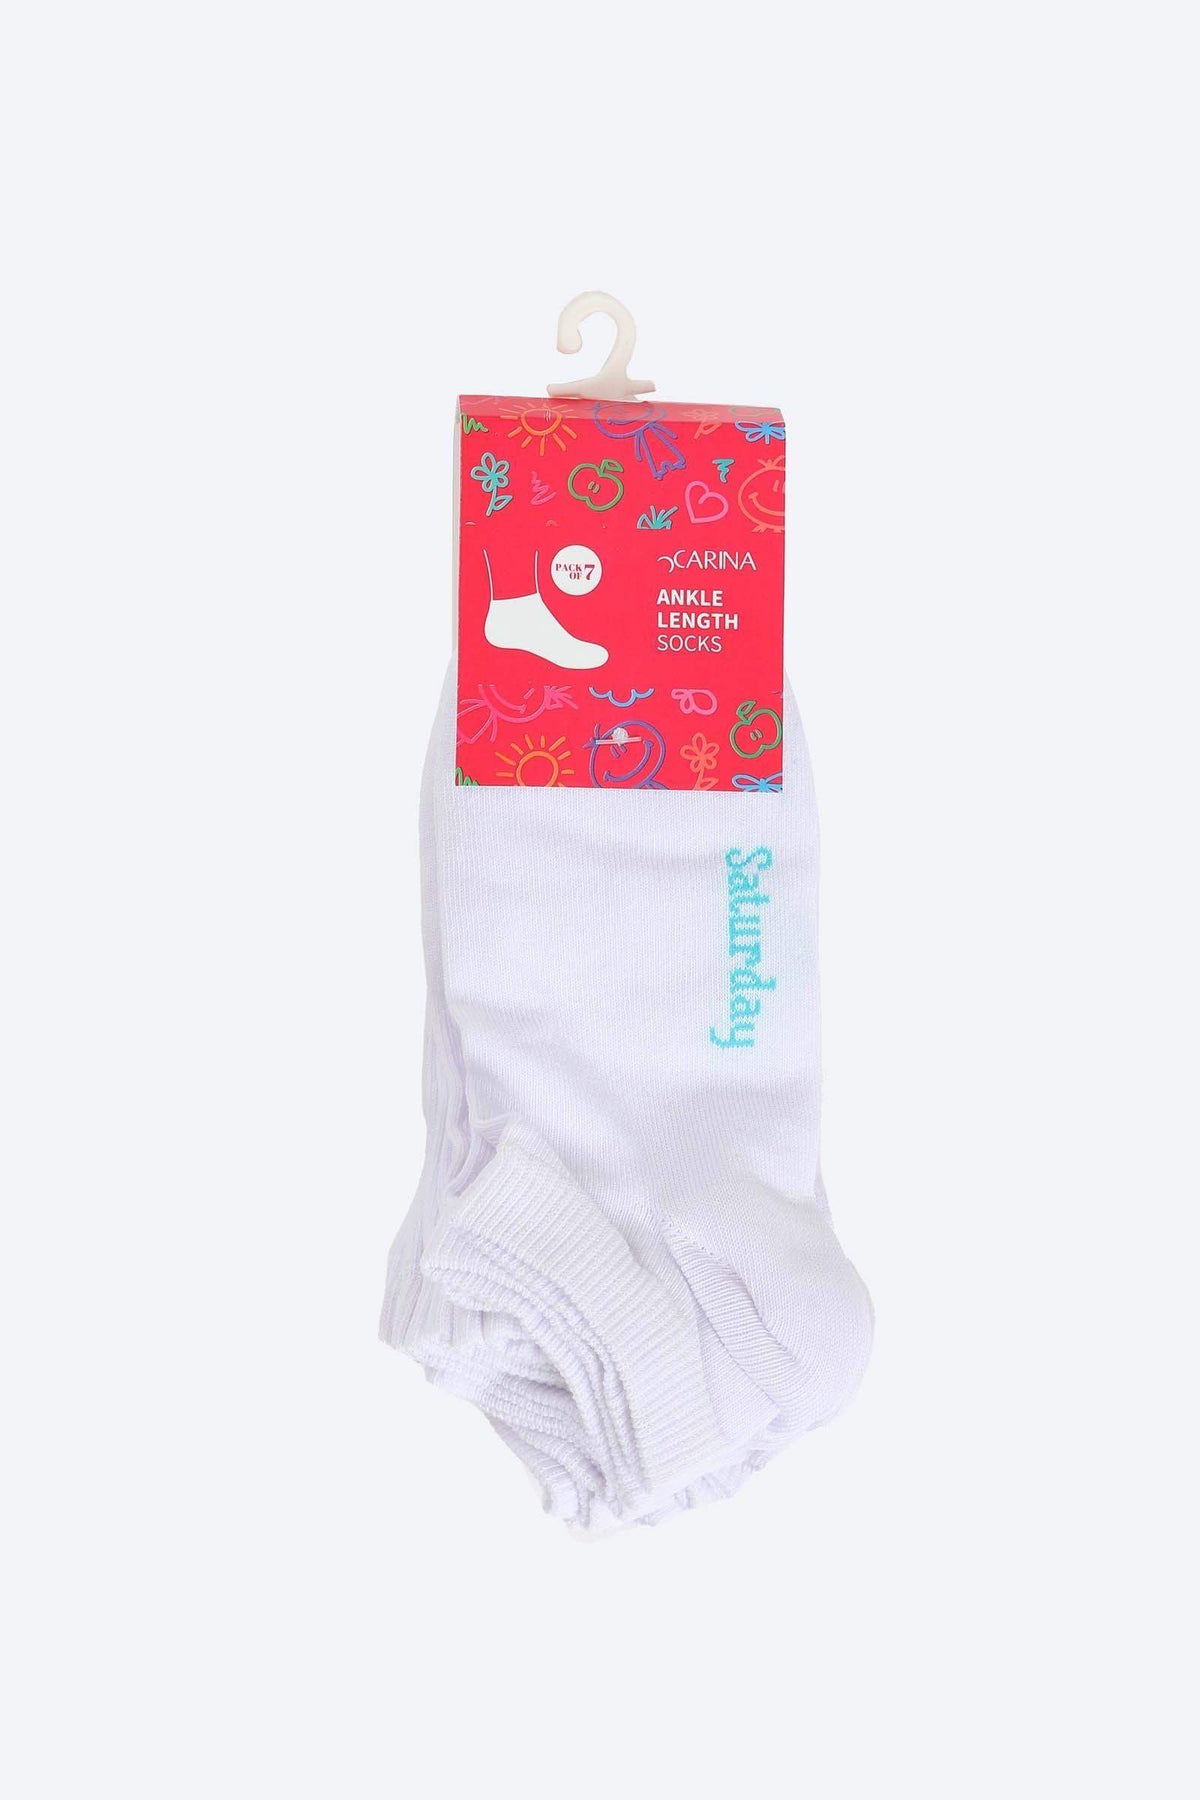 Girly Ankle Length Socks - 7 Pairs - Carina - كارينا